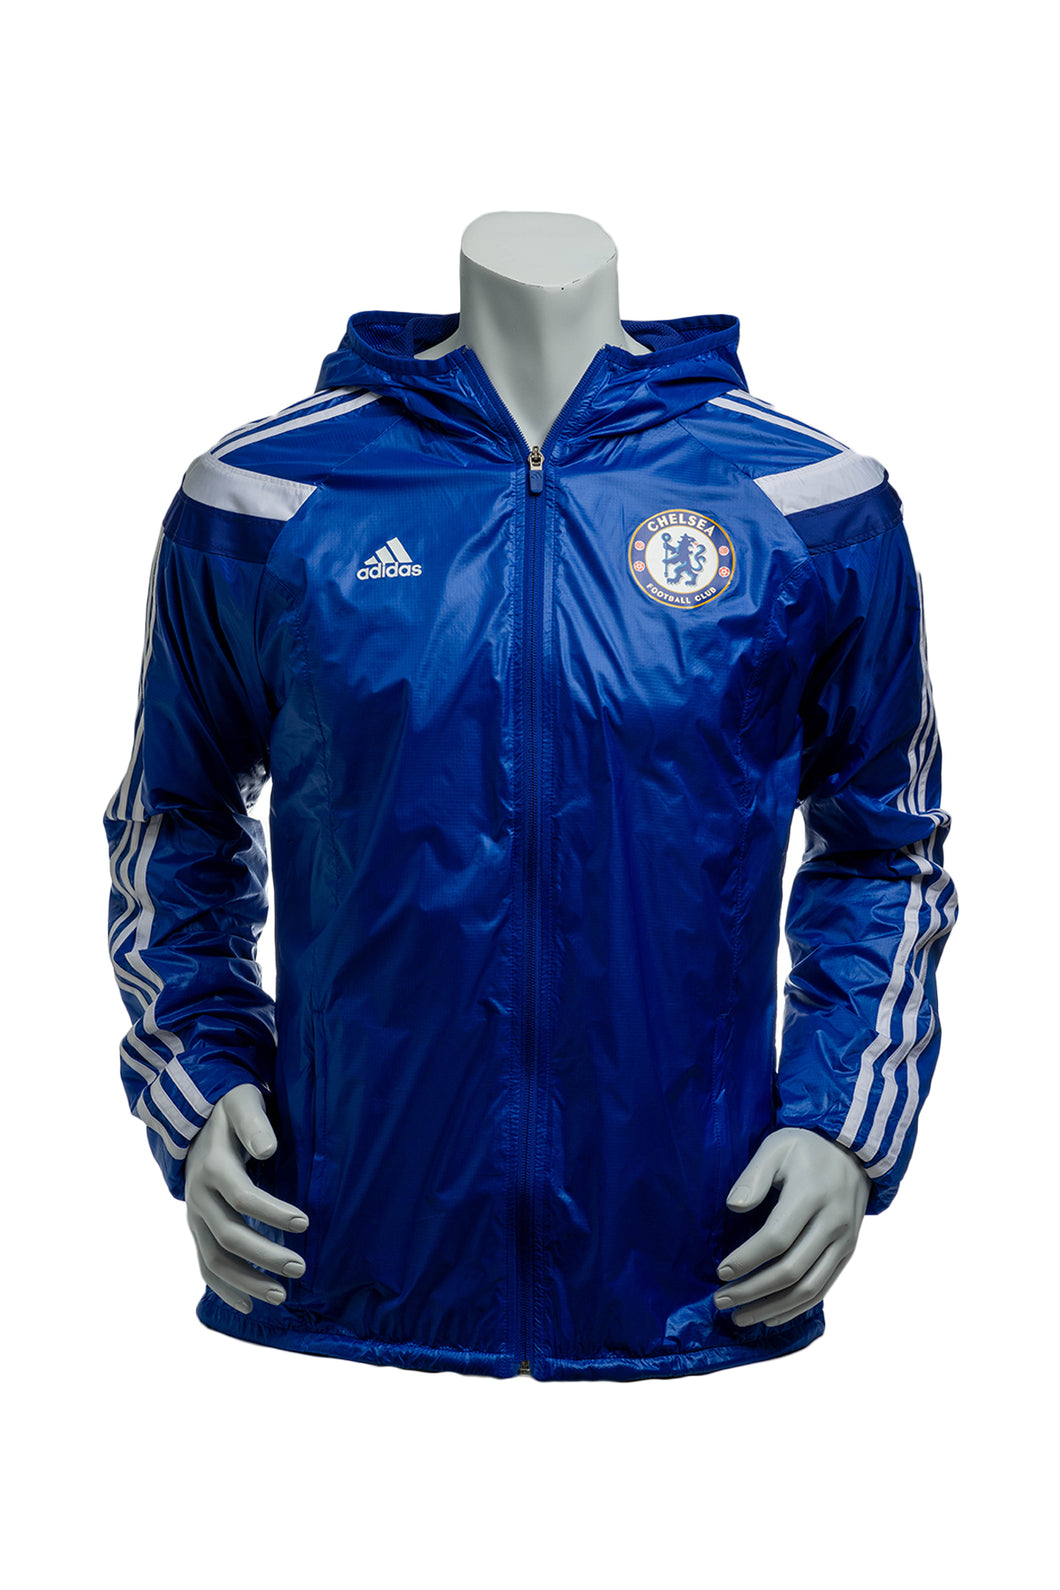 Adidas Premiere League Chelsea Football Club '14-'15 Home Windbreaker Jacket Men's Medium